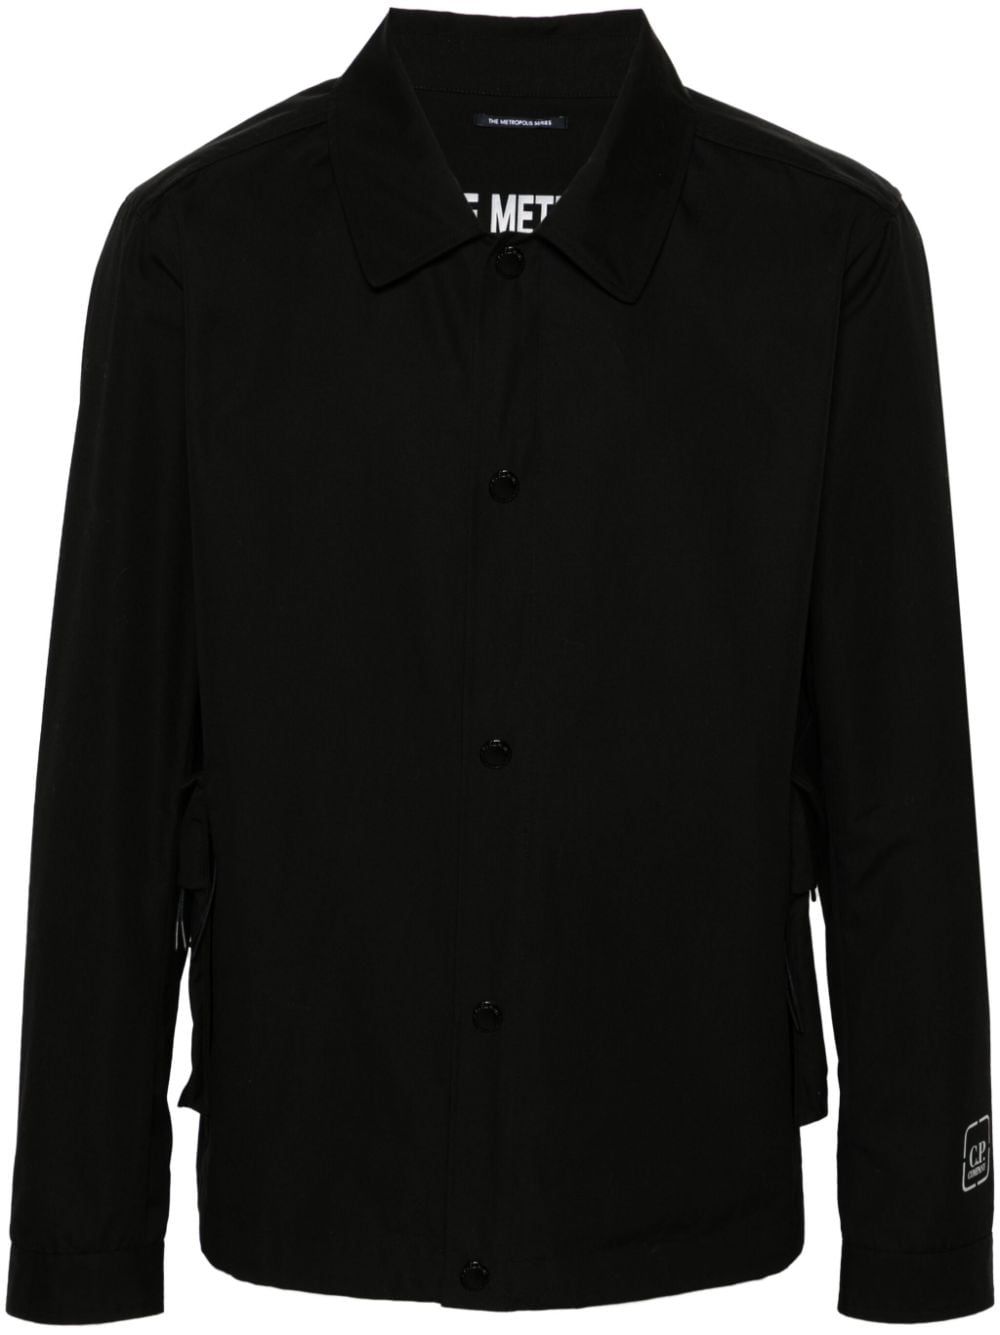 C.P. Company The Metropolis Series shirt jacket - Black von C.P. Company